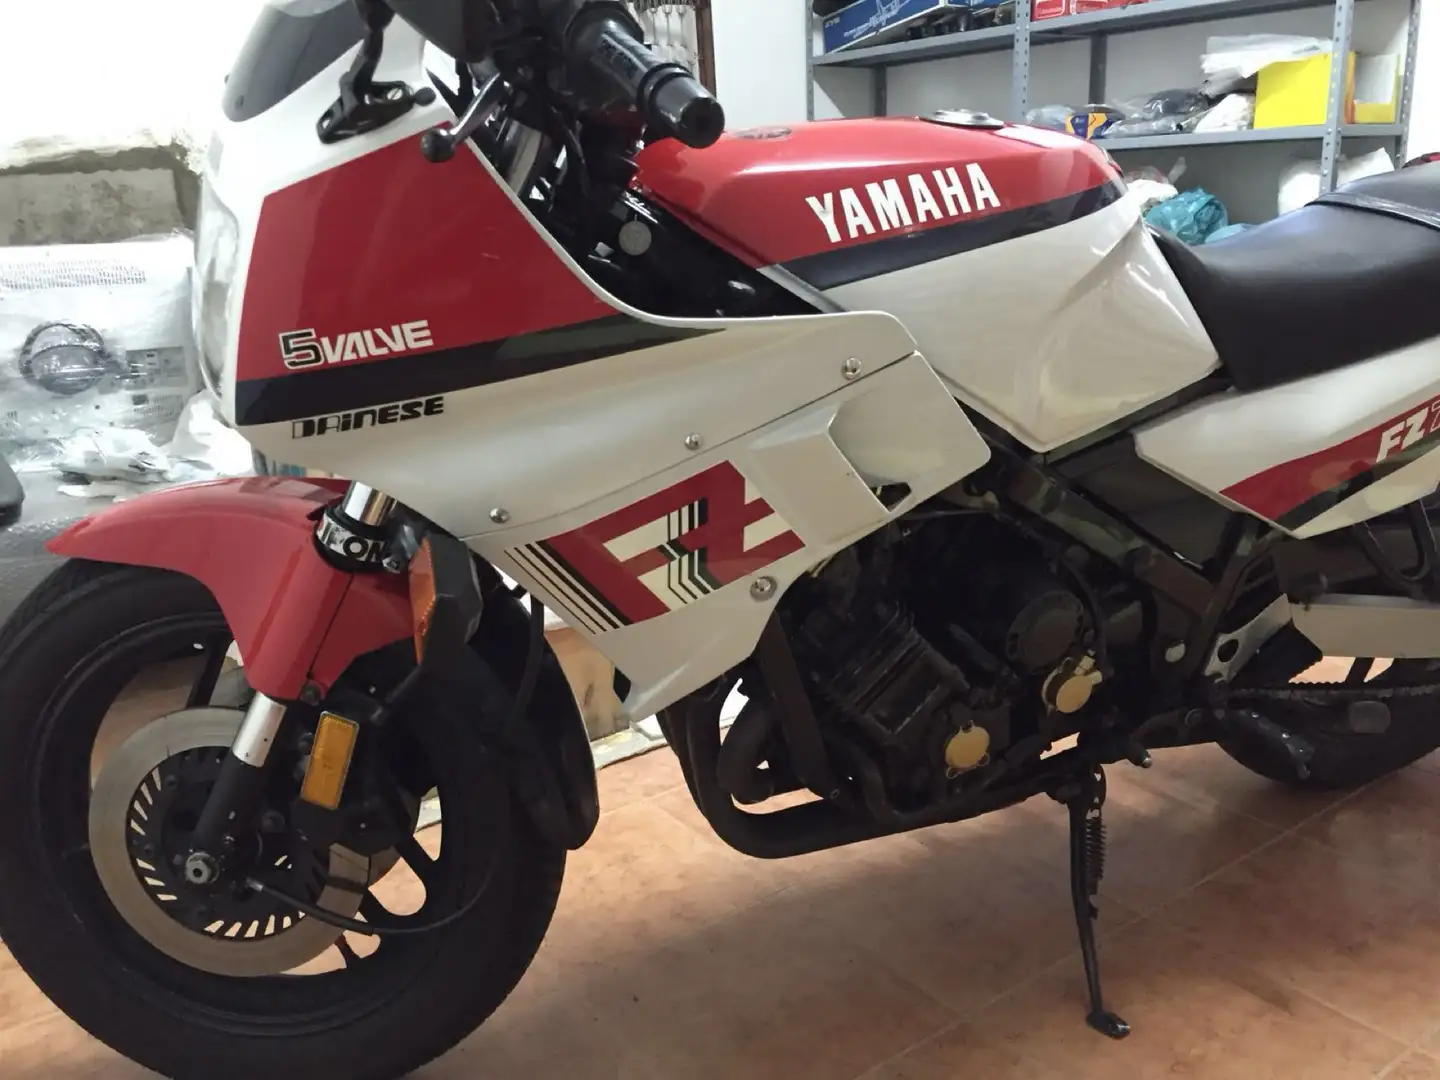 Yamaha FZ 750 immatricolazione canada colorazione bianca rossa Bílá - 1